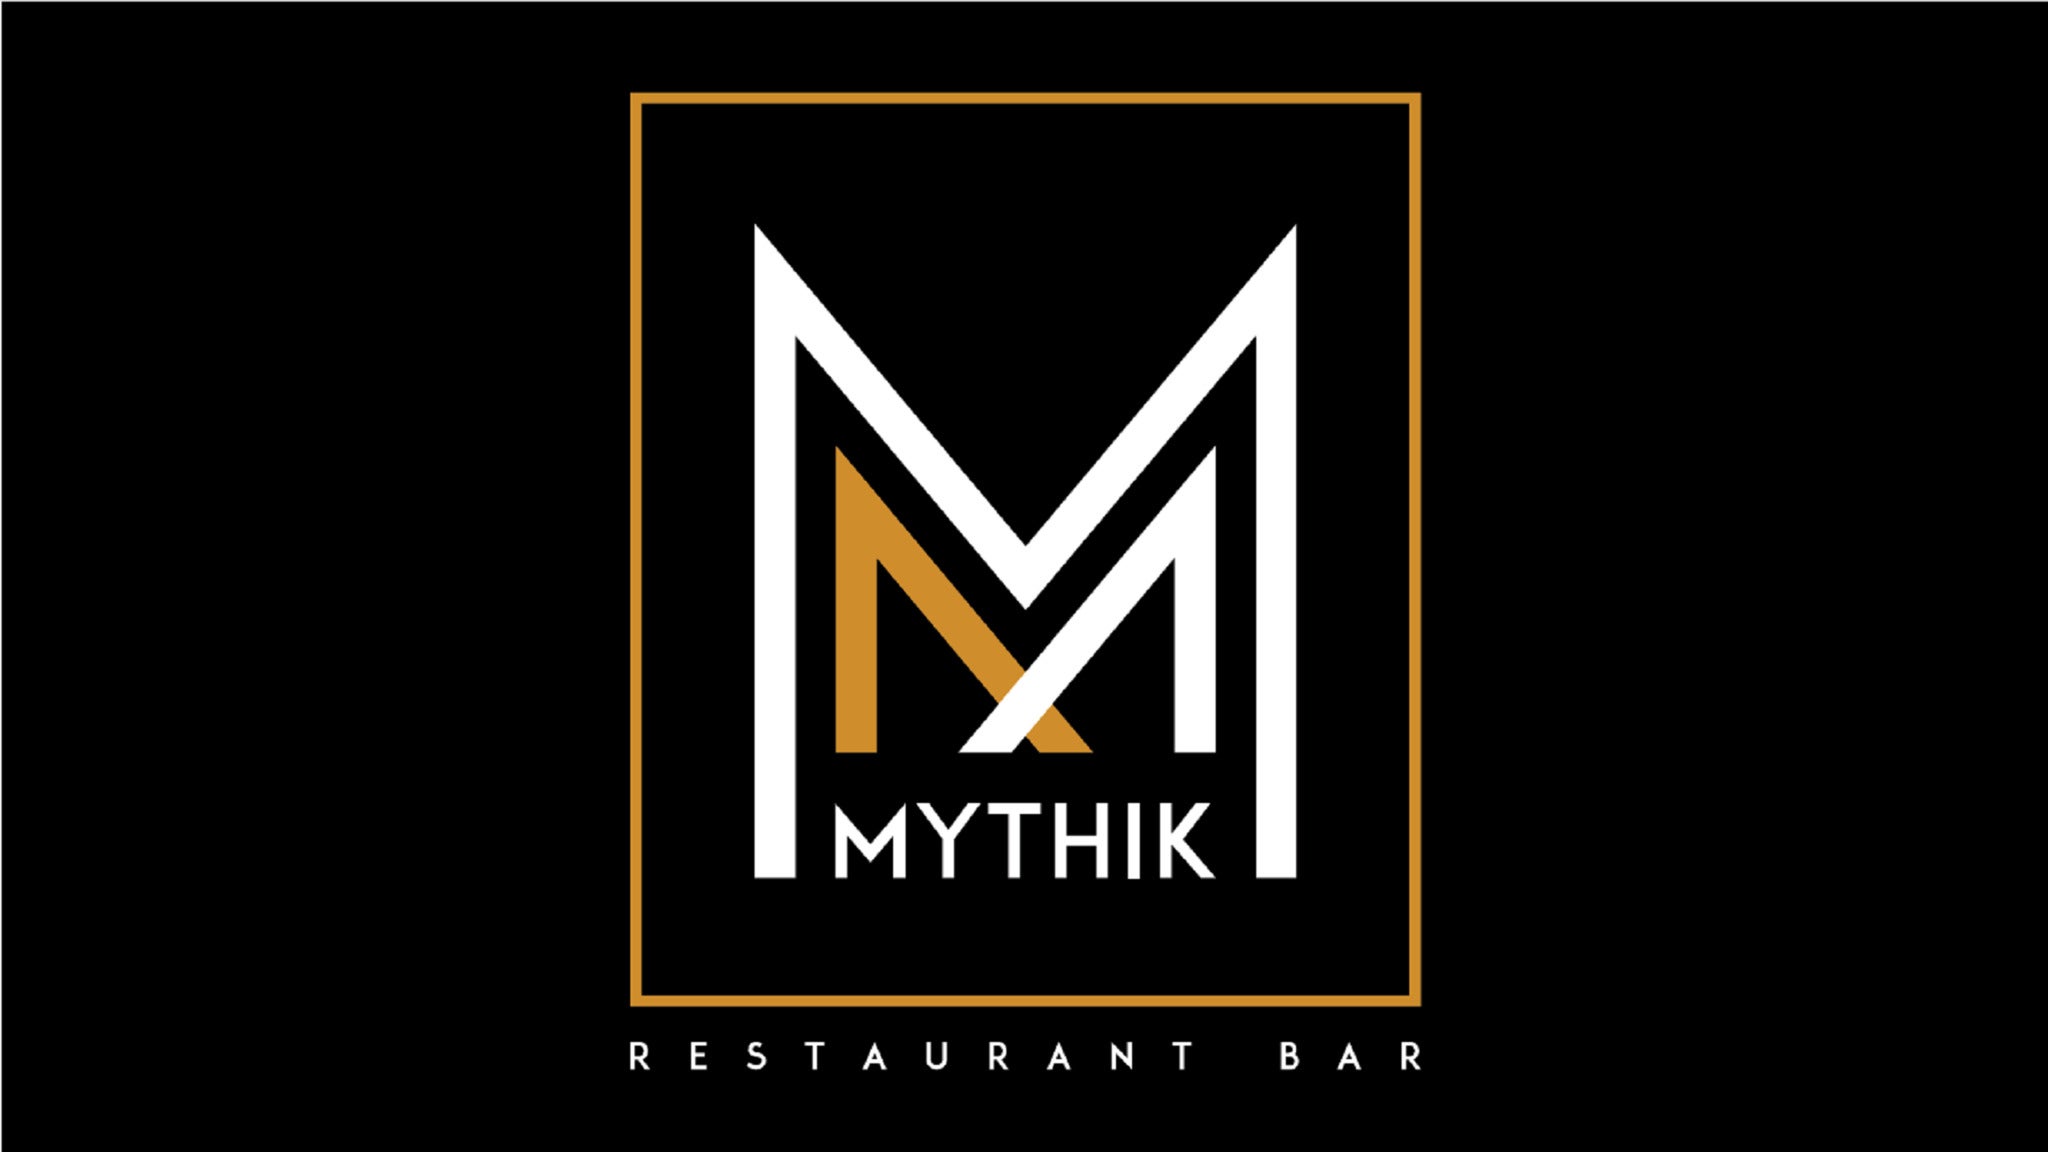 Restaurant Mythik presale information on freepresalepasswords.com